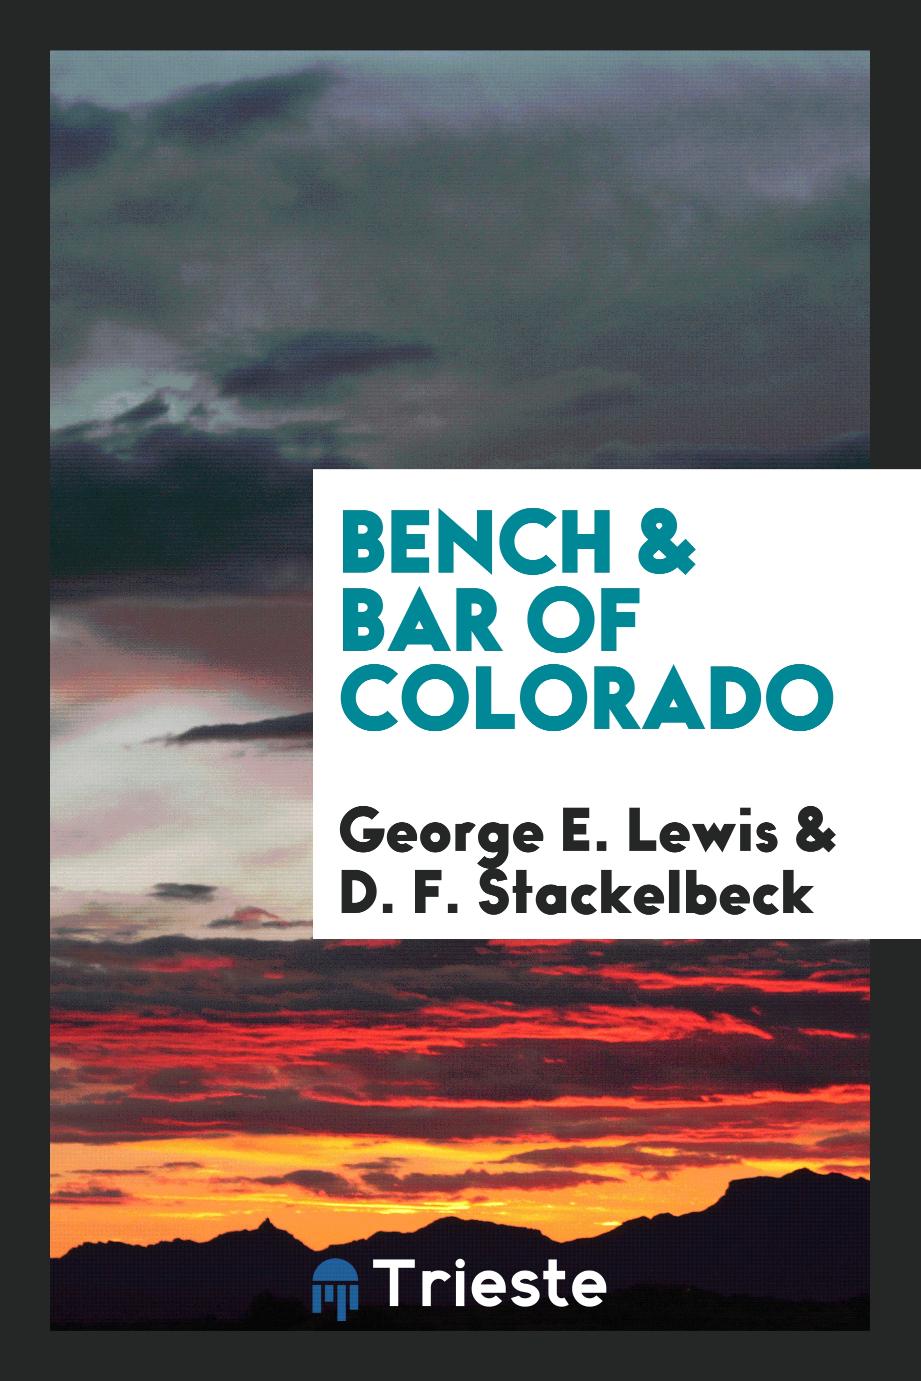 Bench & bar of Colorado